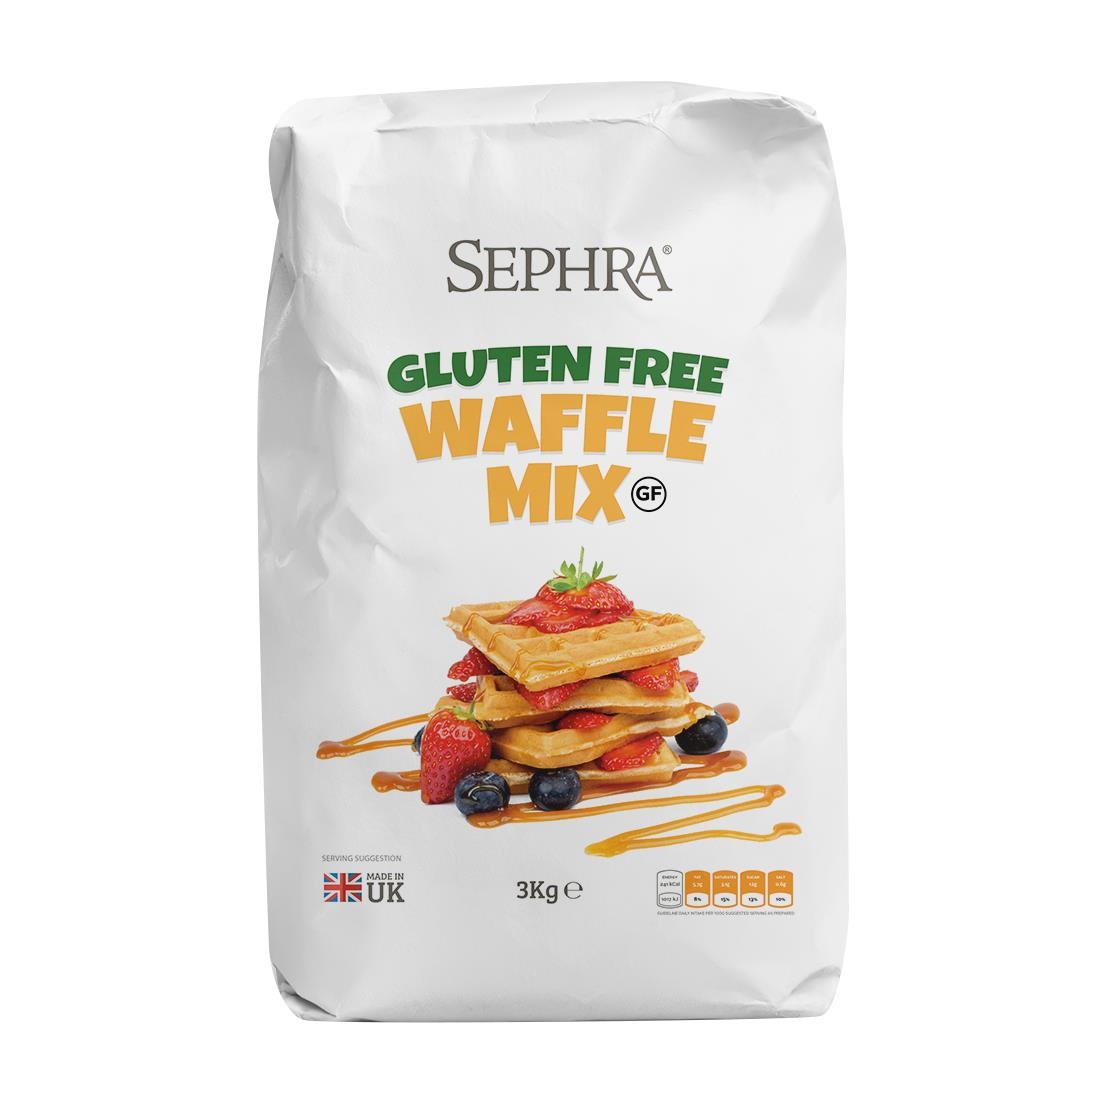 Sephra Gluten-Free Waffle Mix 3kg Pack of 4 (HU130)